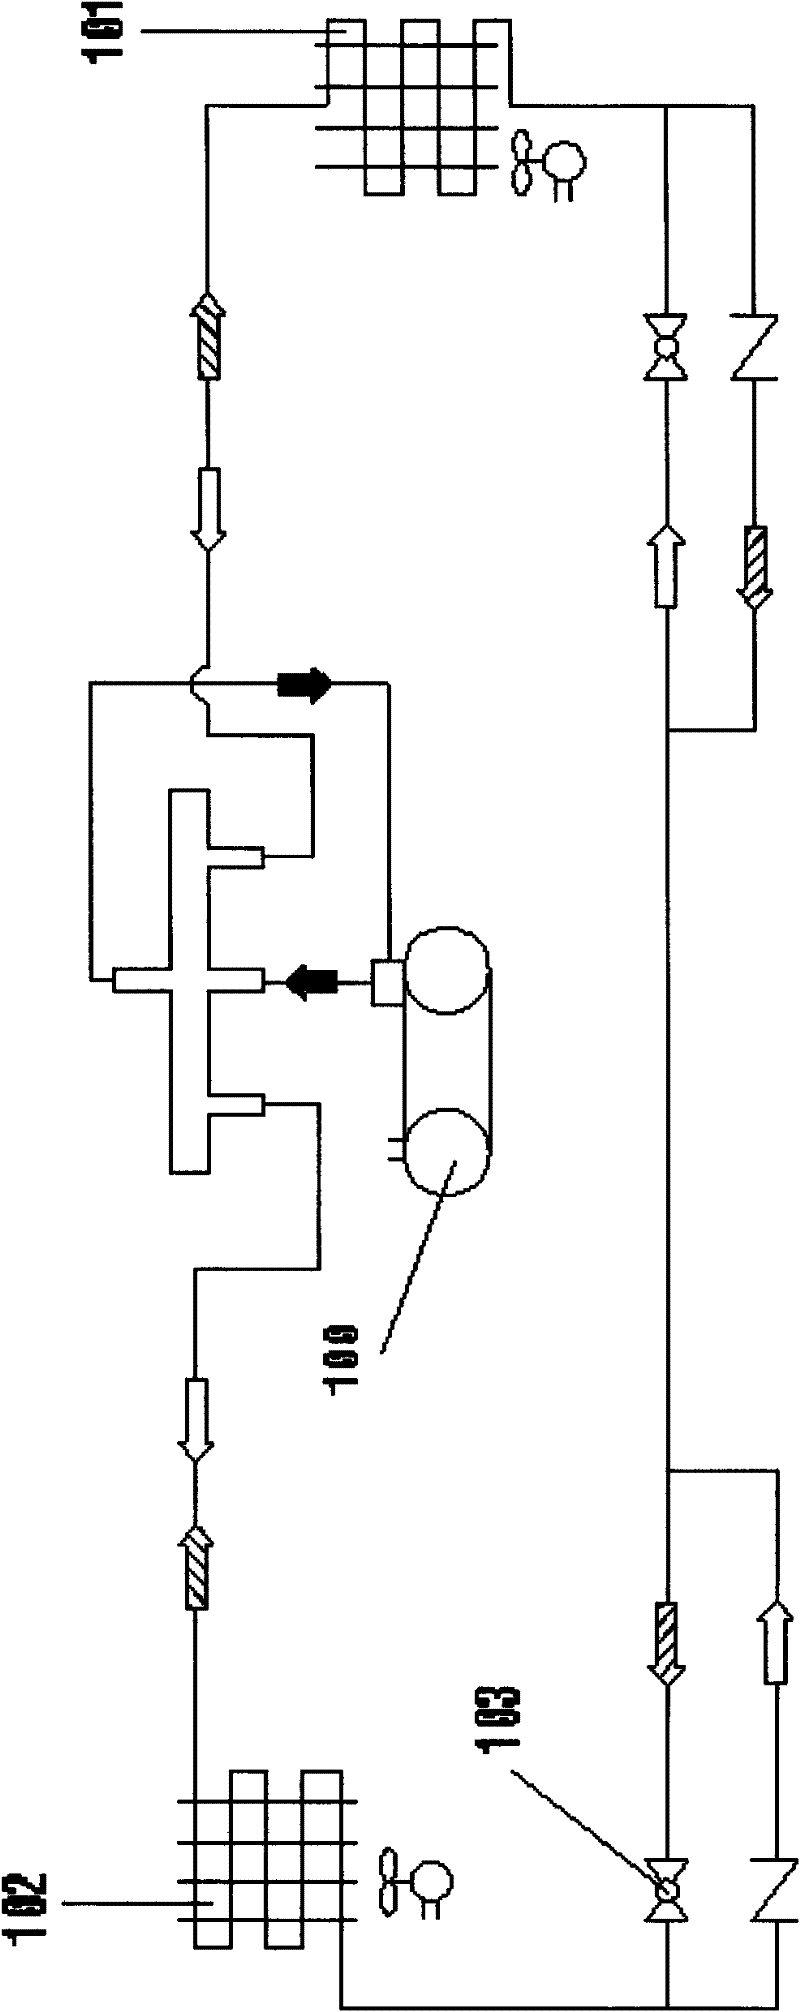 Parallel modular heat pump unit